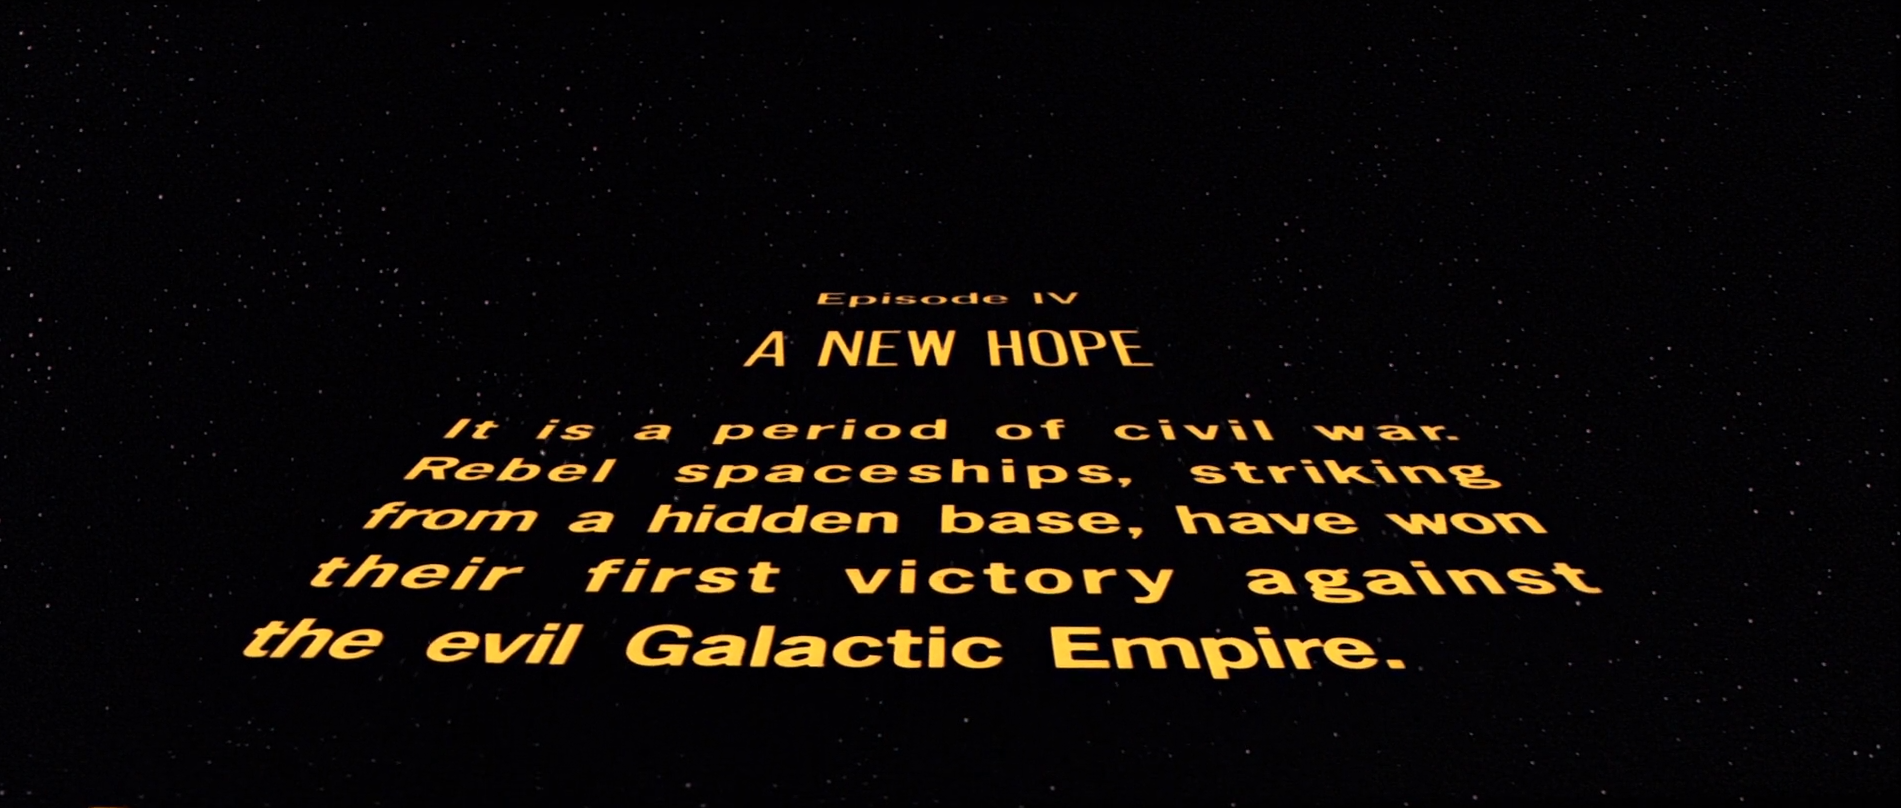 Star Wars abertura 1977